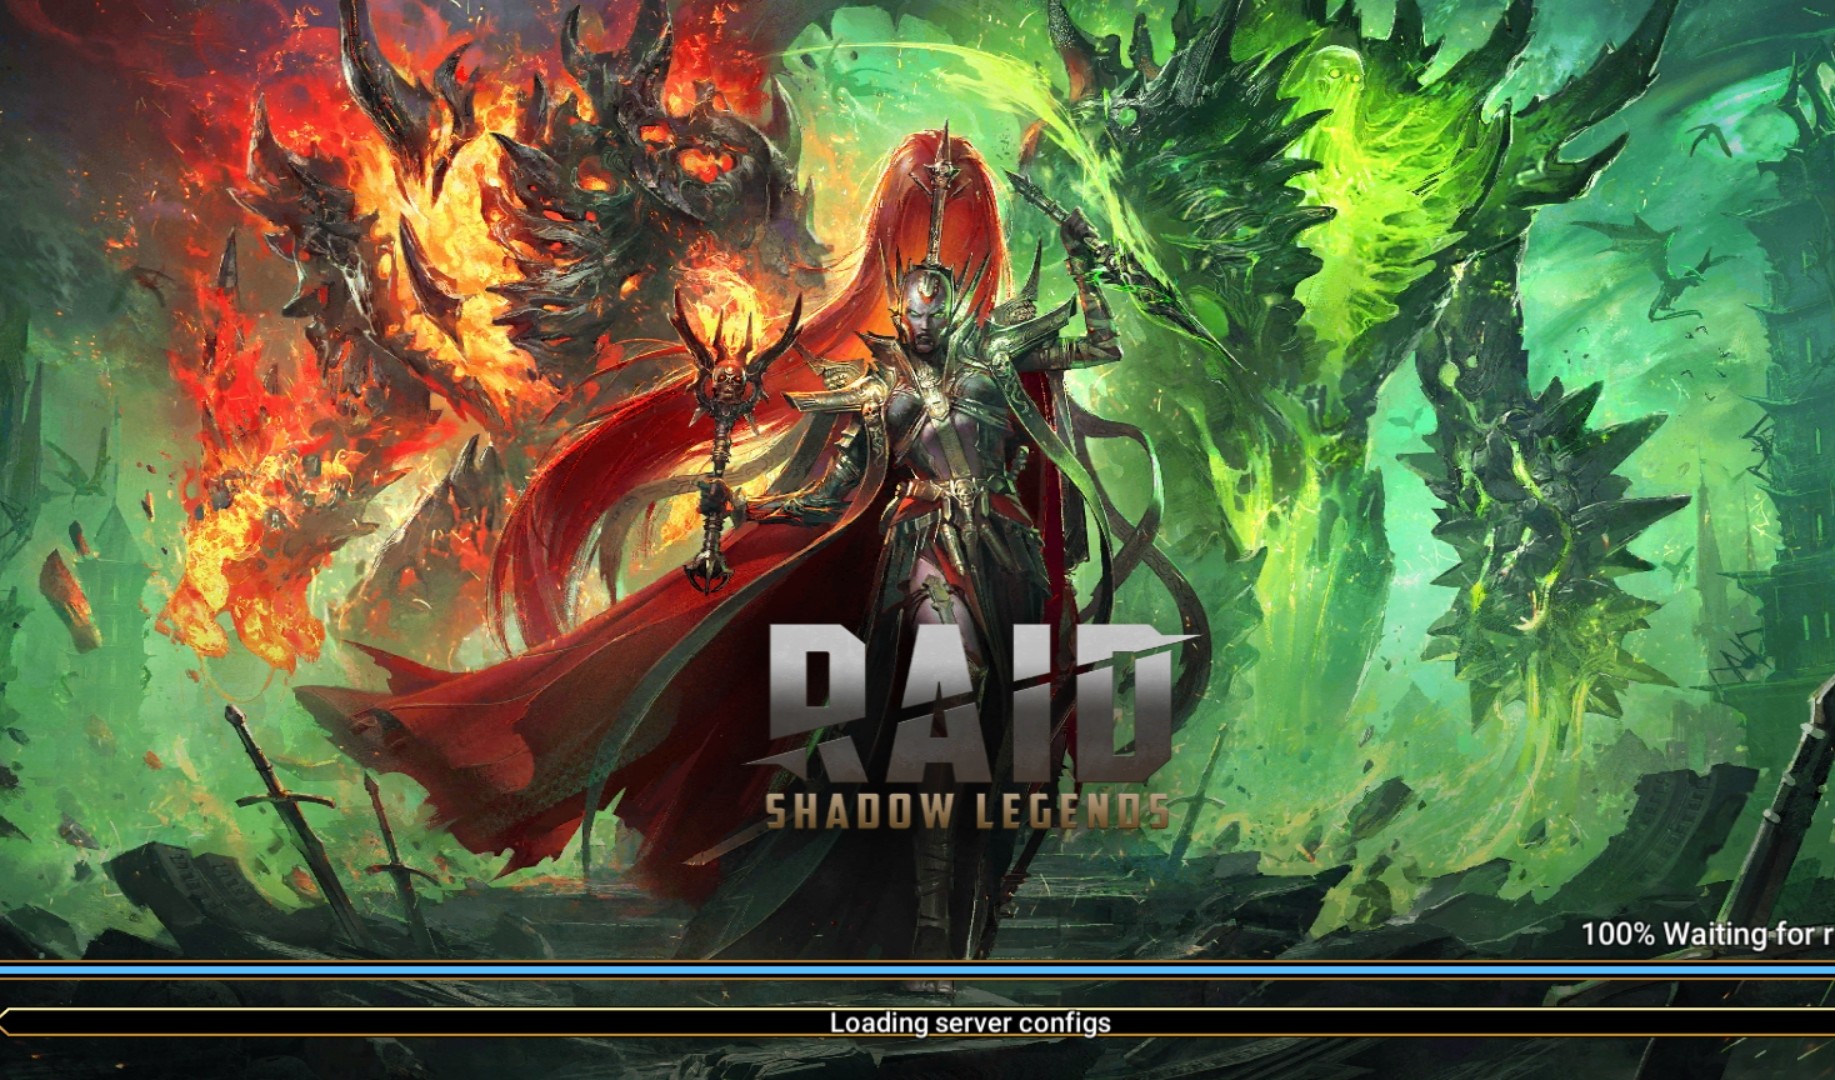 raid shadow legends mods pc